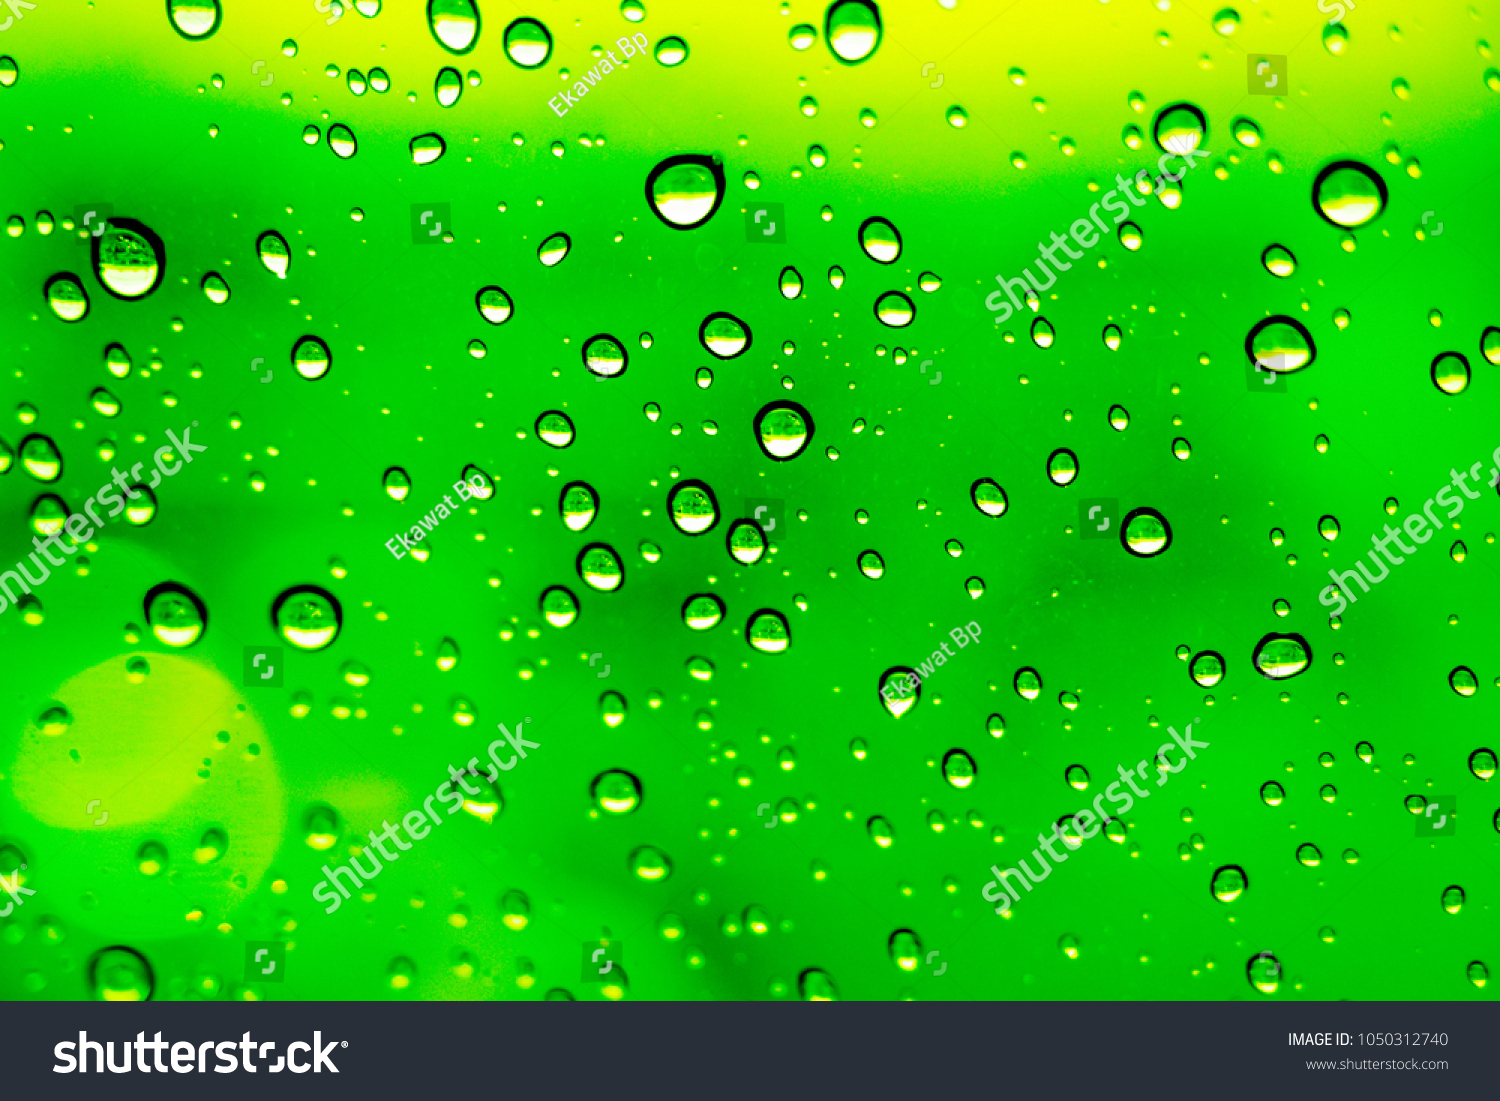 2,730 Rain on a green screen Images, Stock Photos & Vectors | Shutterstock